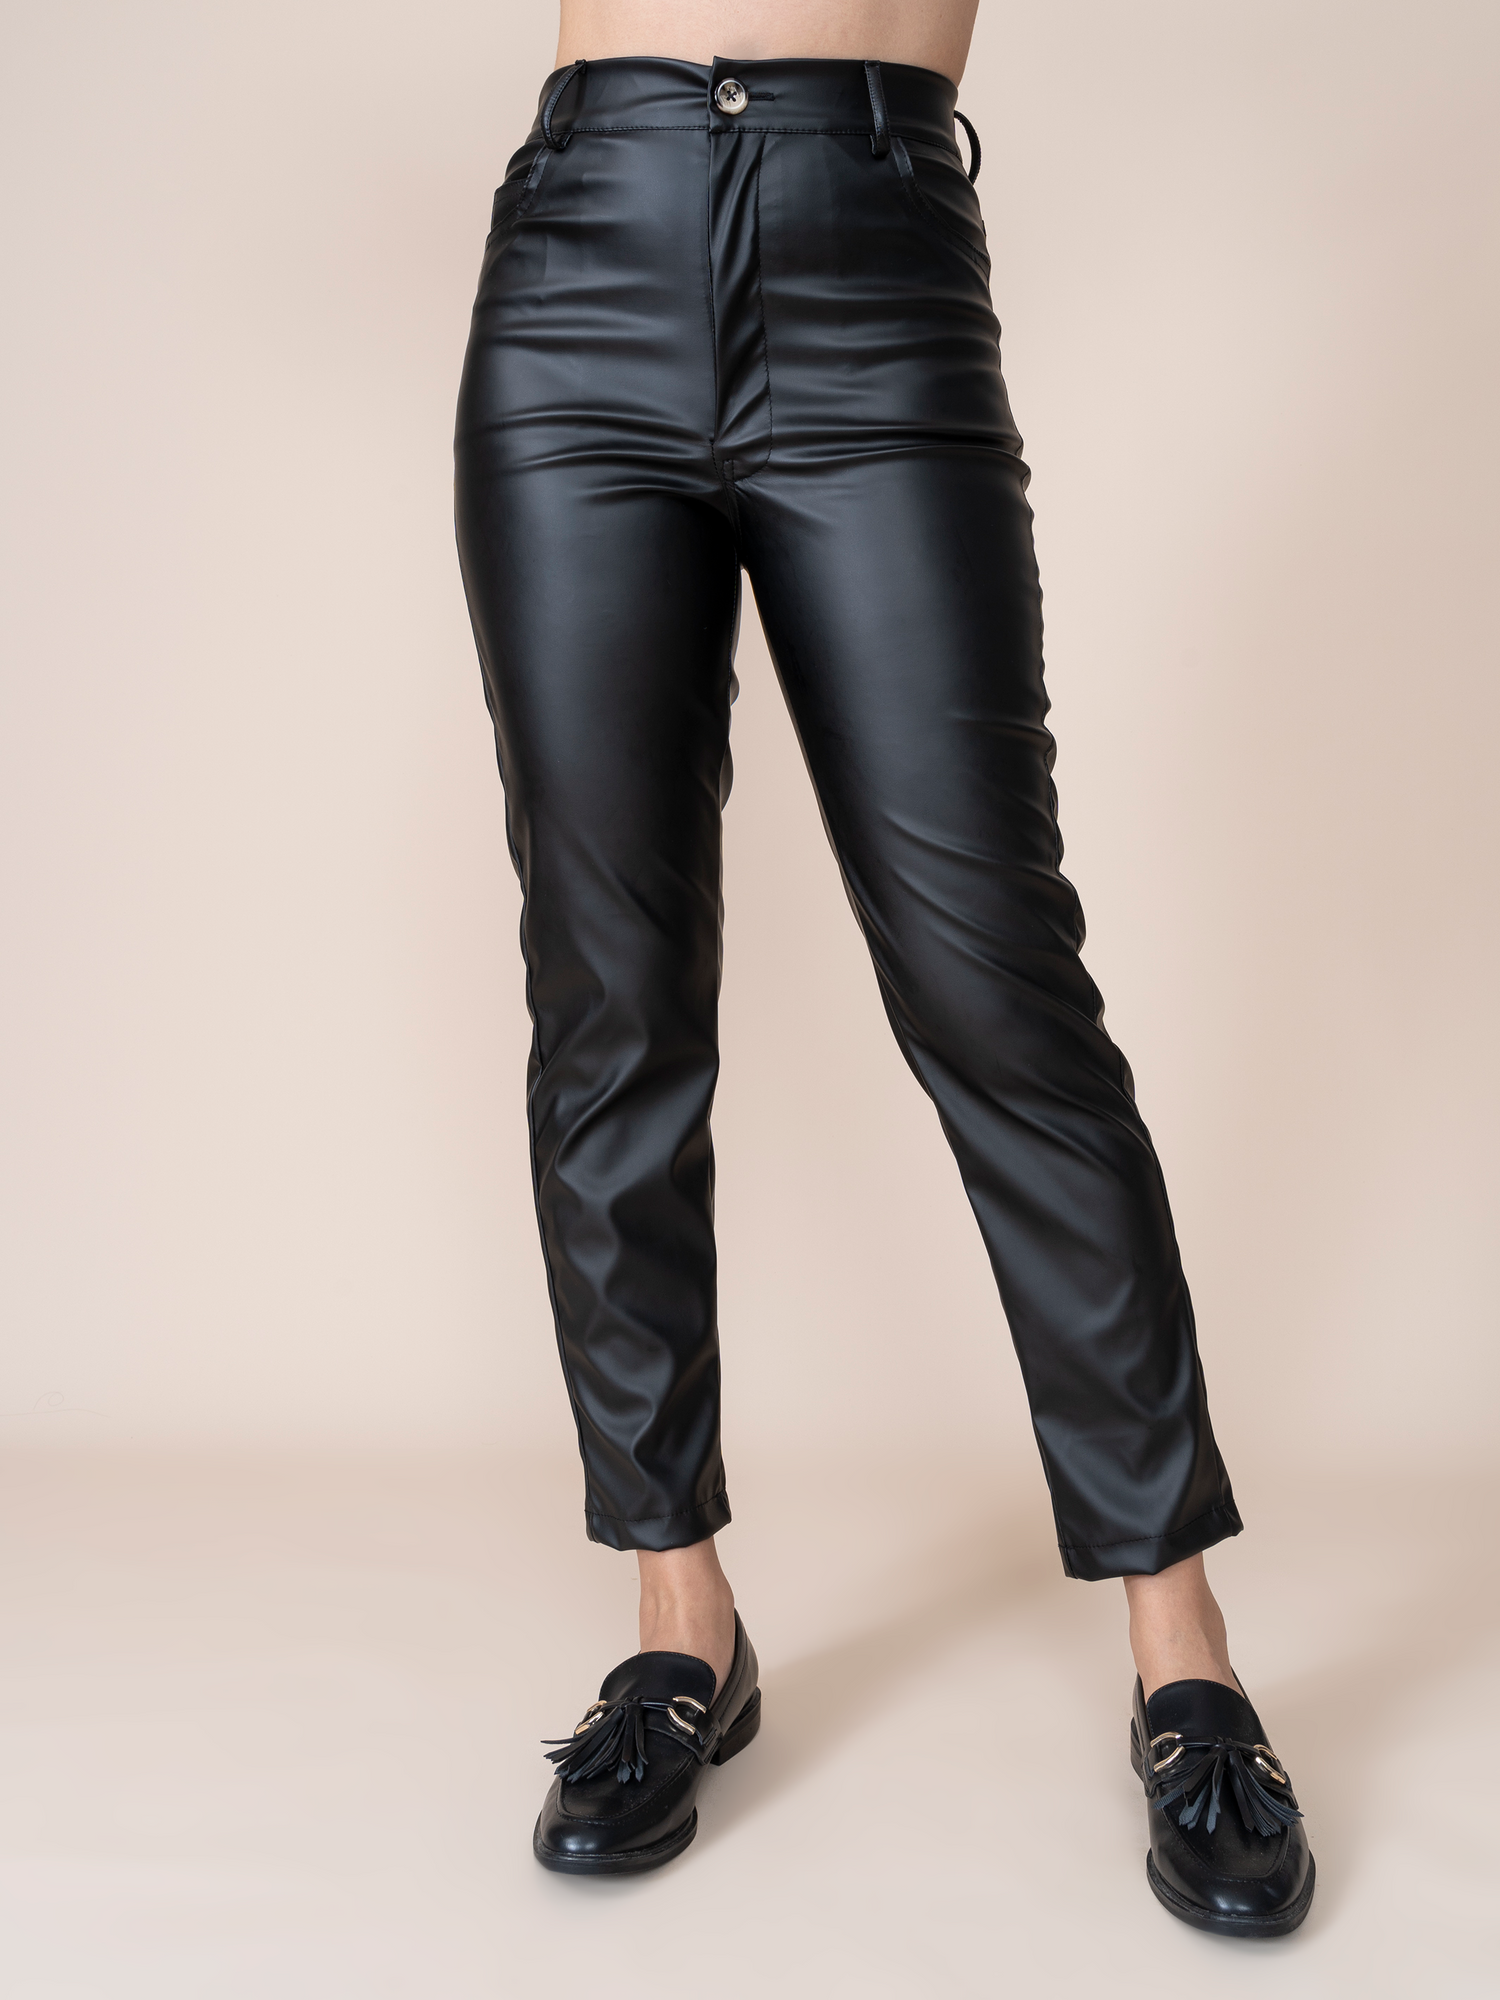 Thamara Black Leather Trousers